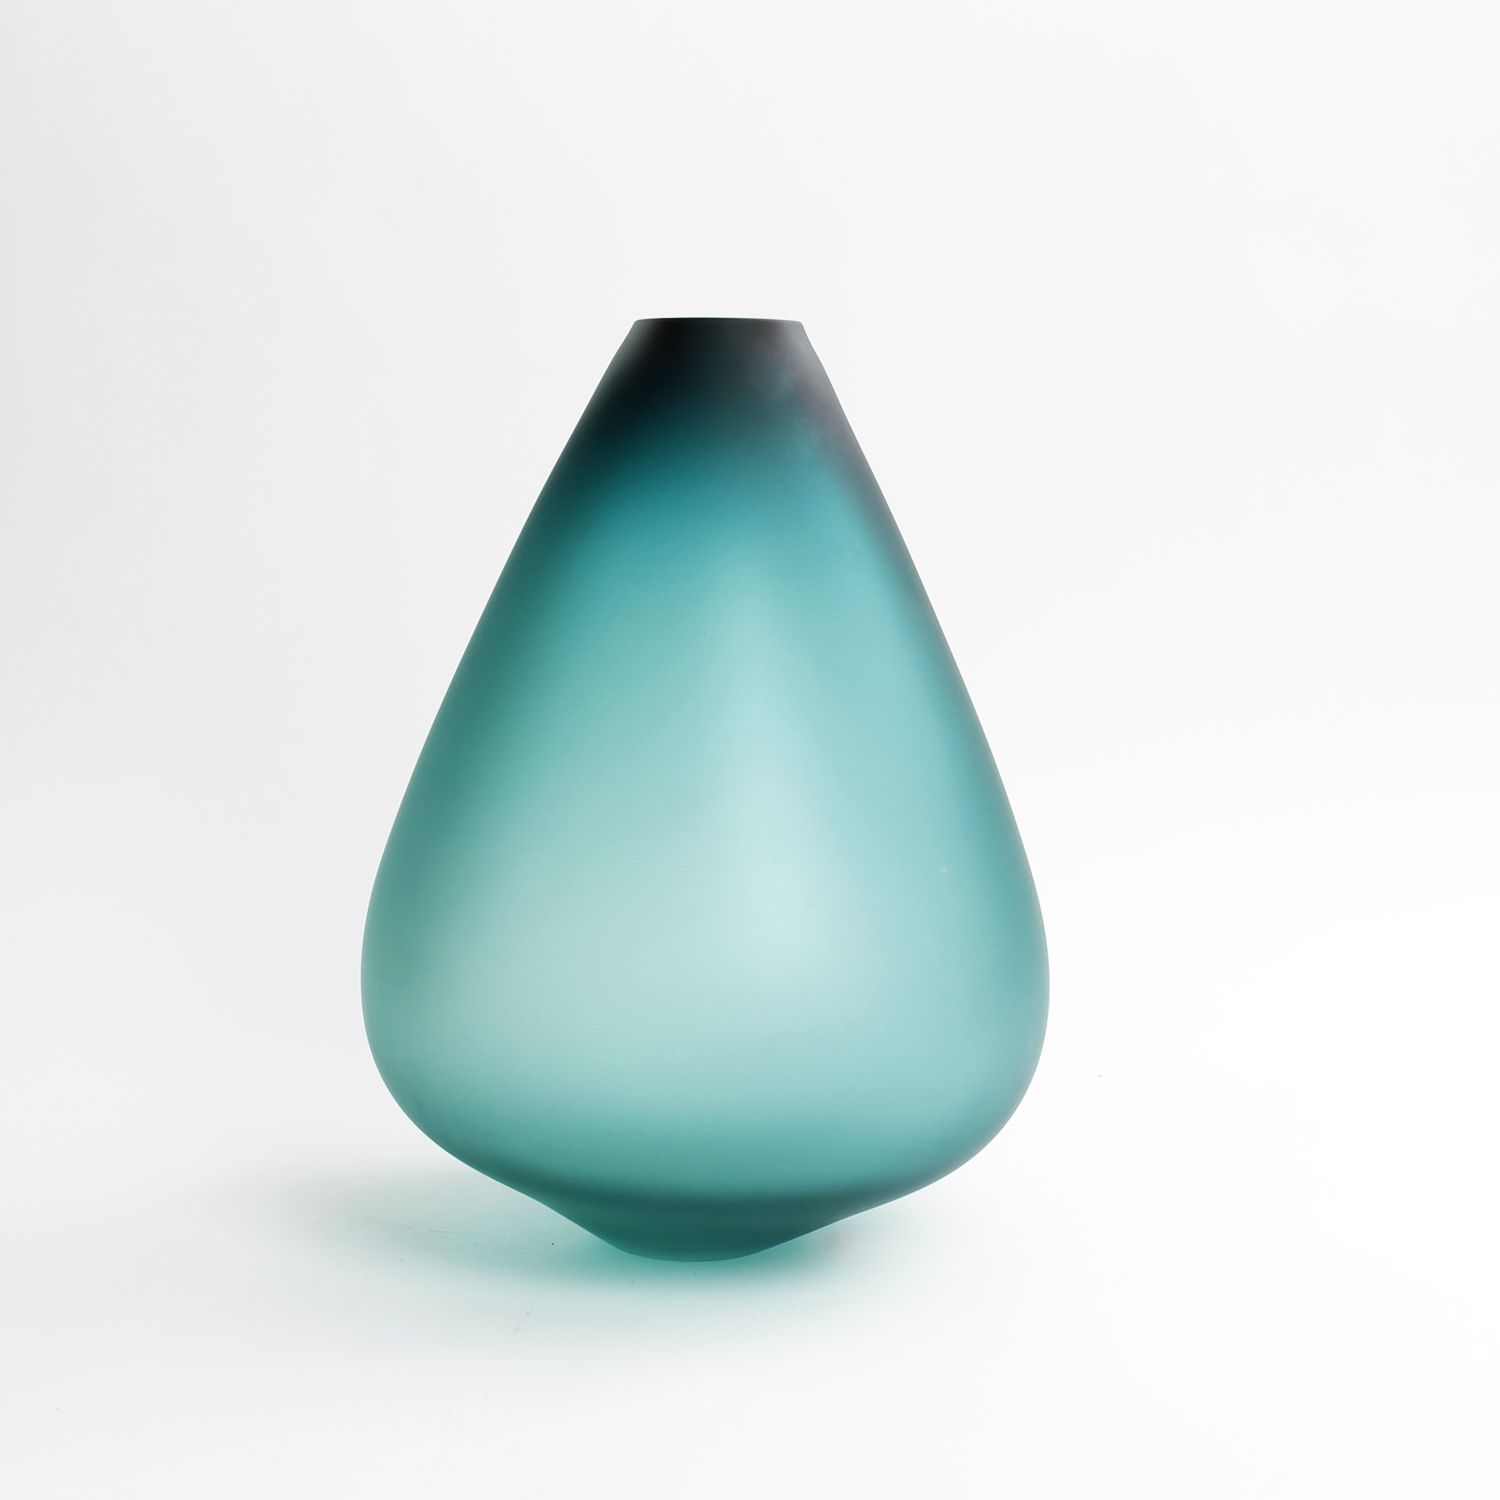 Soffi Studio: Large Teal Vase Product Image 1 of 1